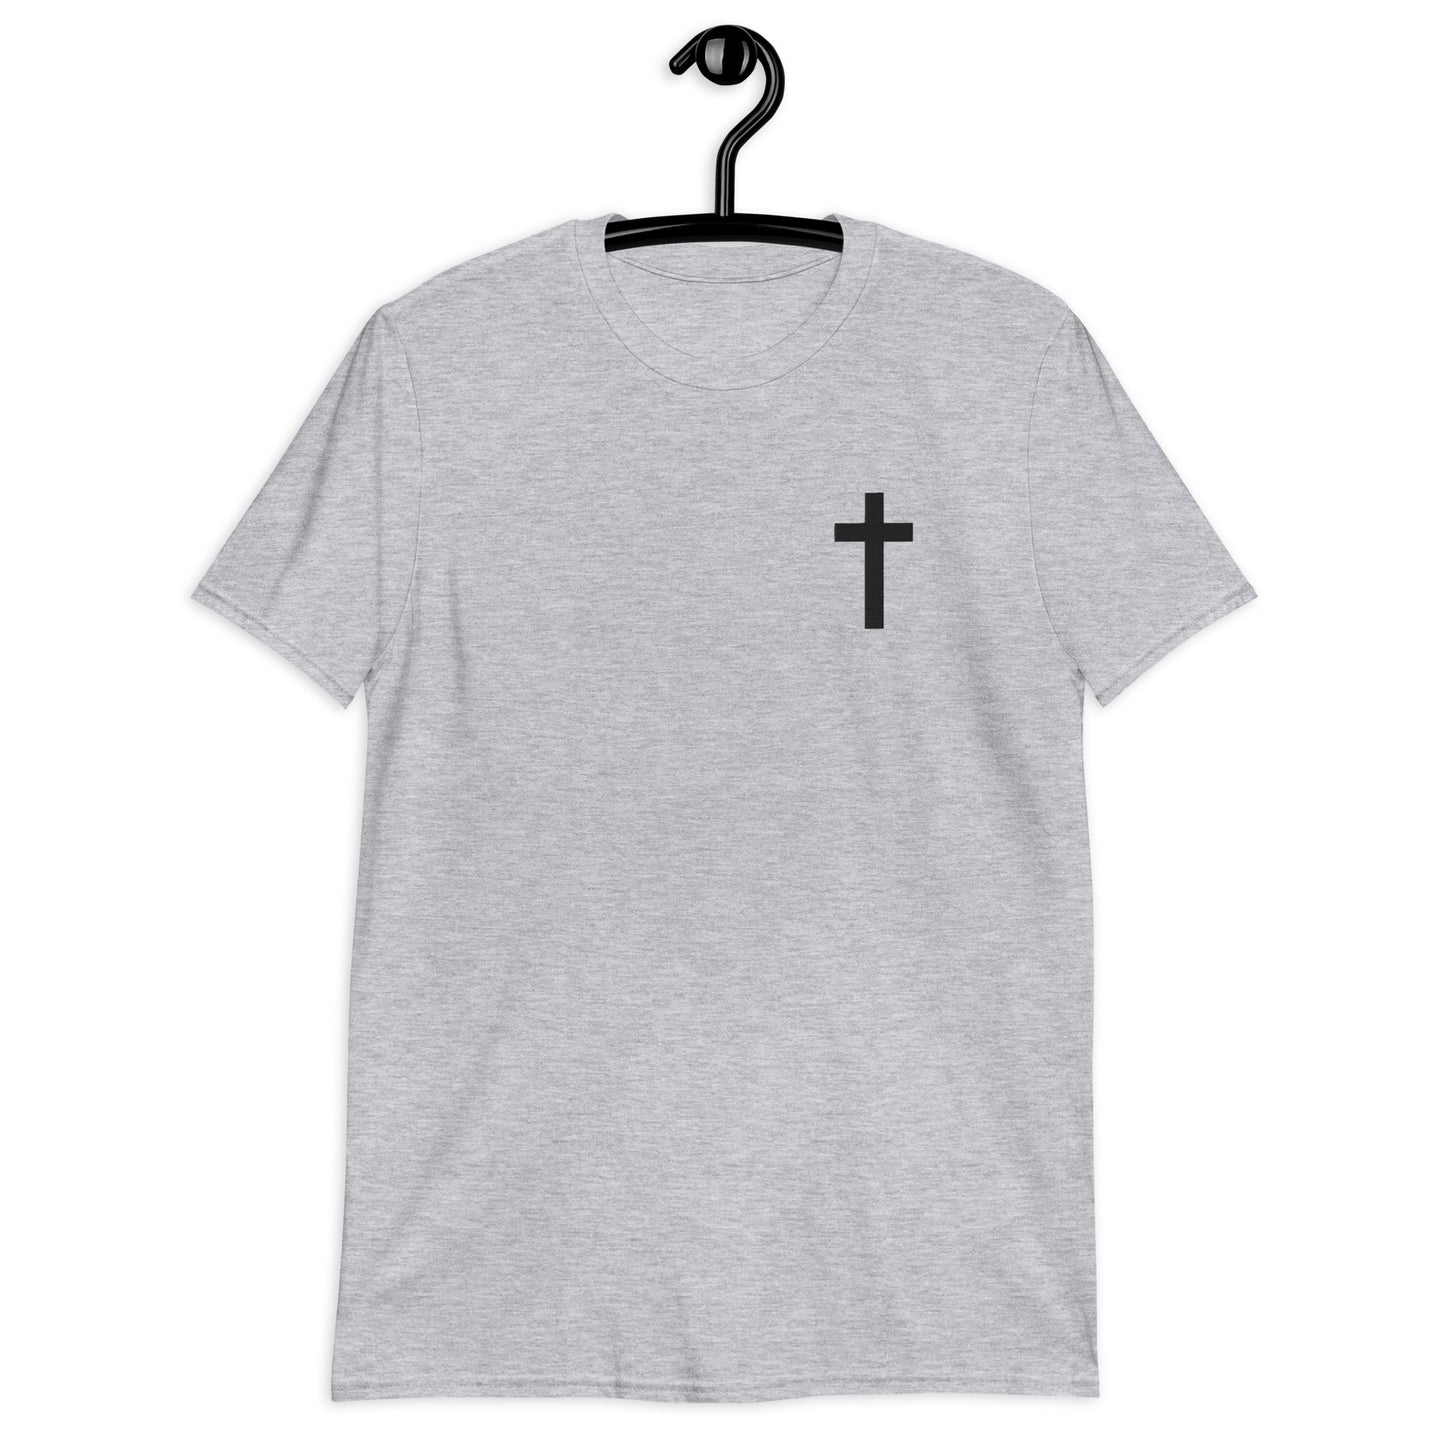 christian t shirt grey